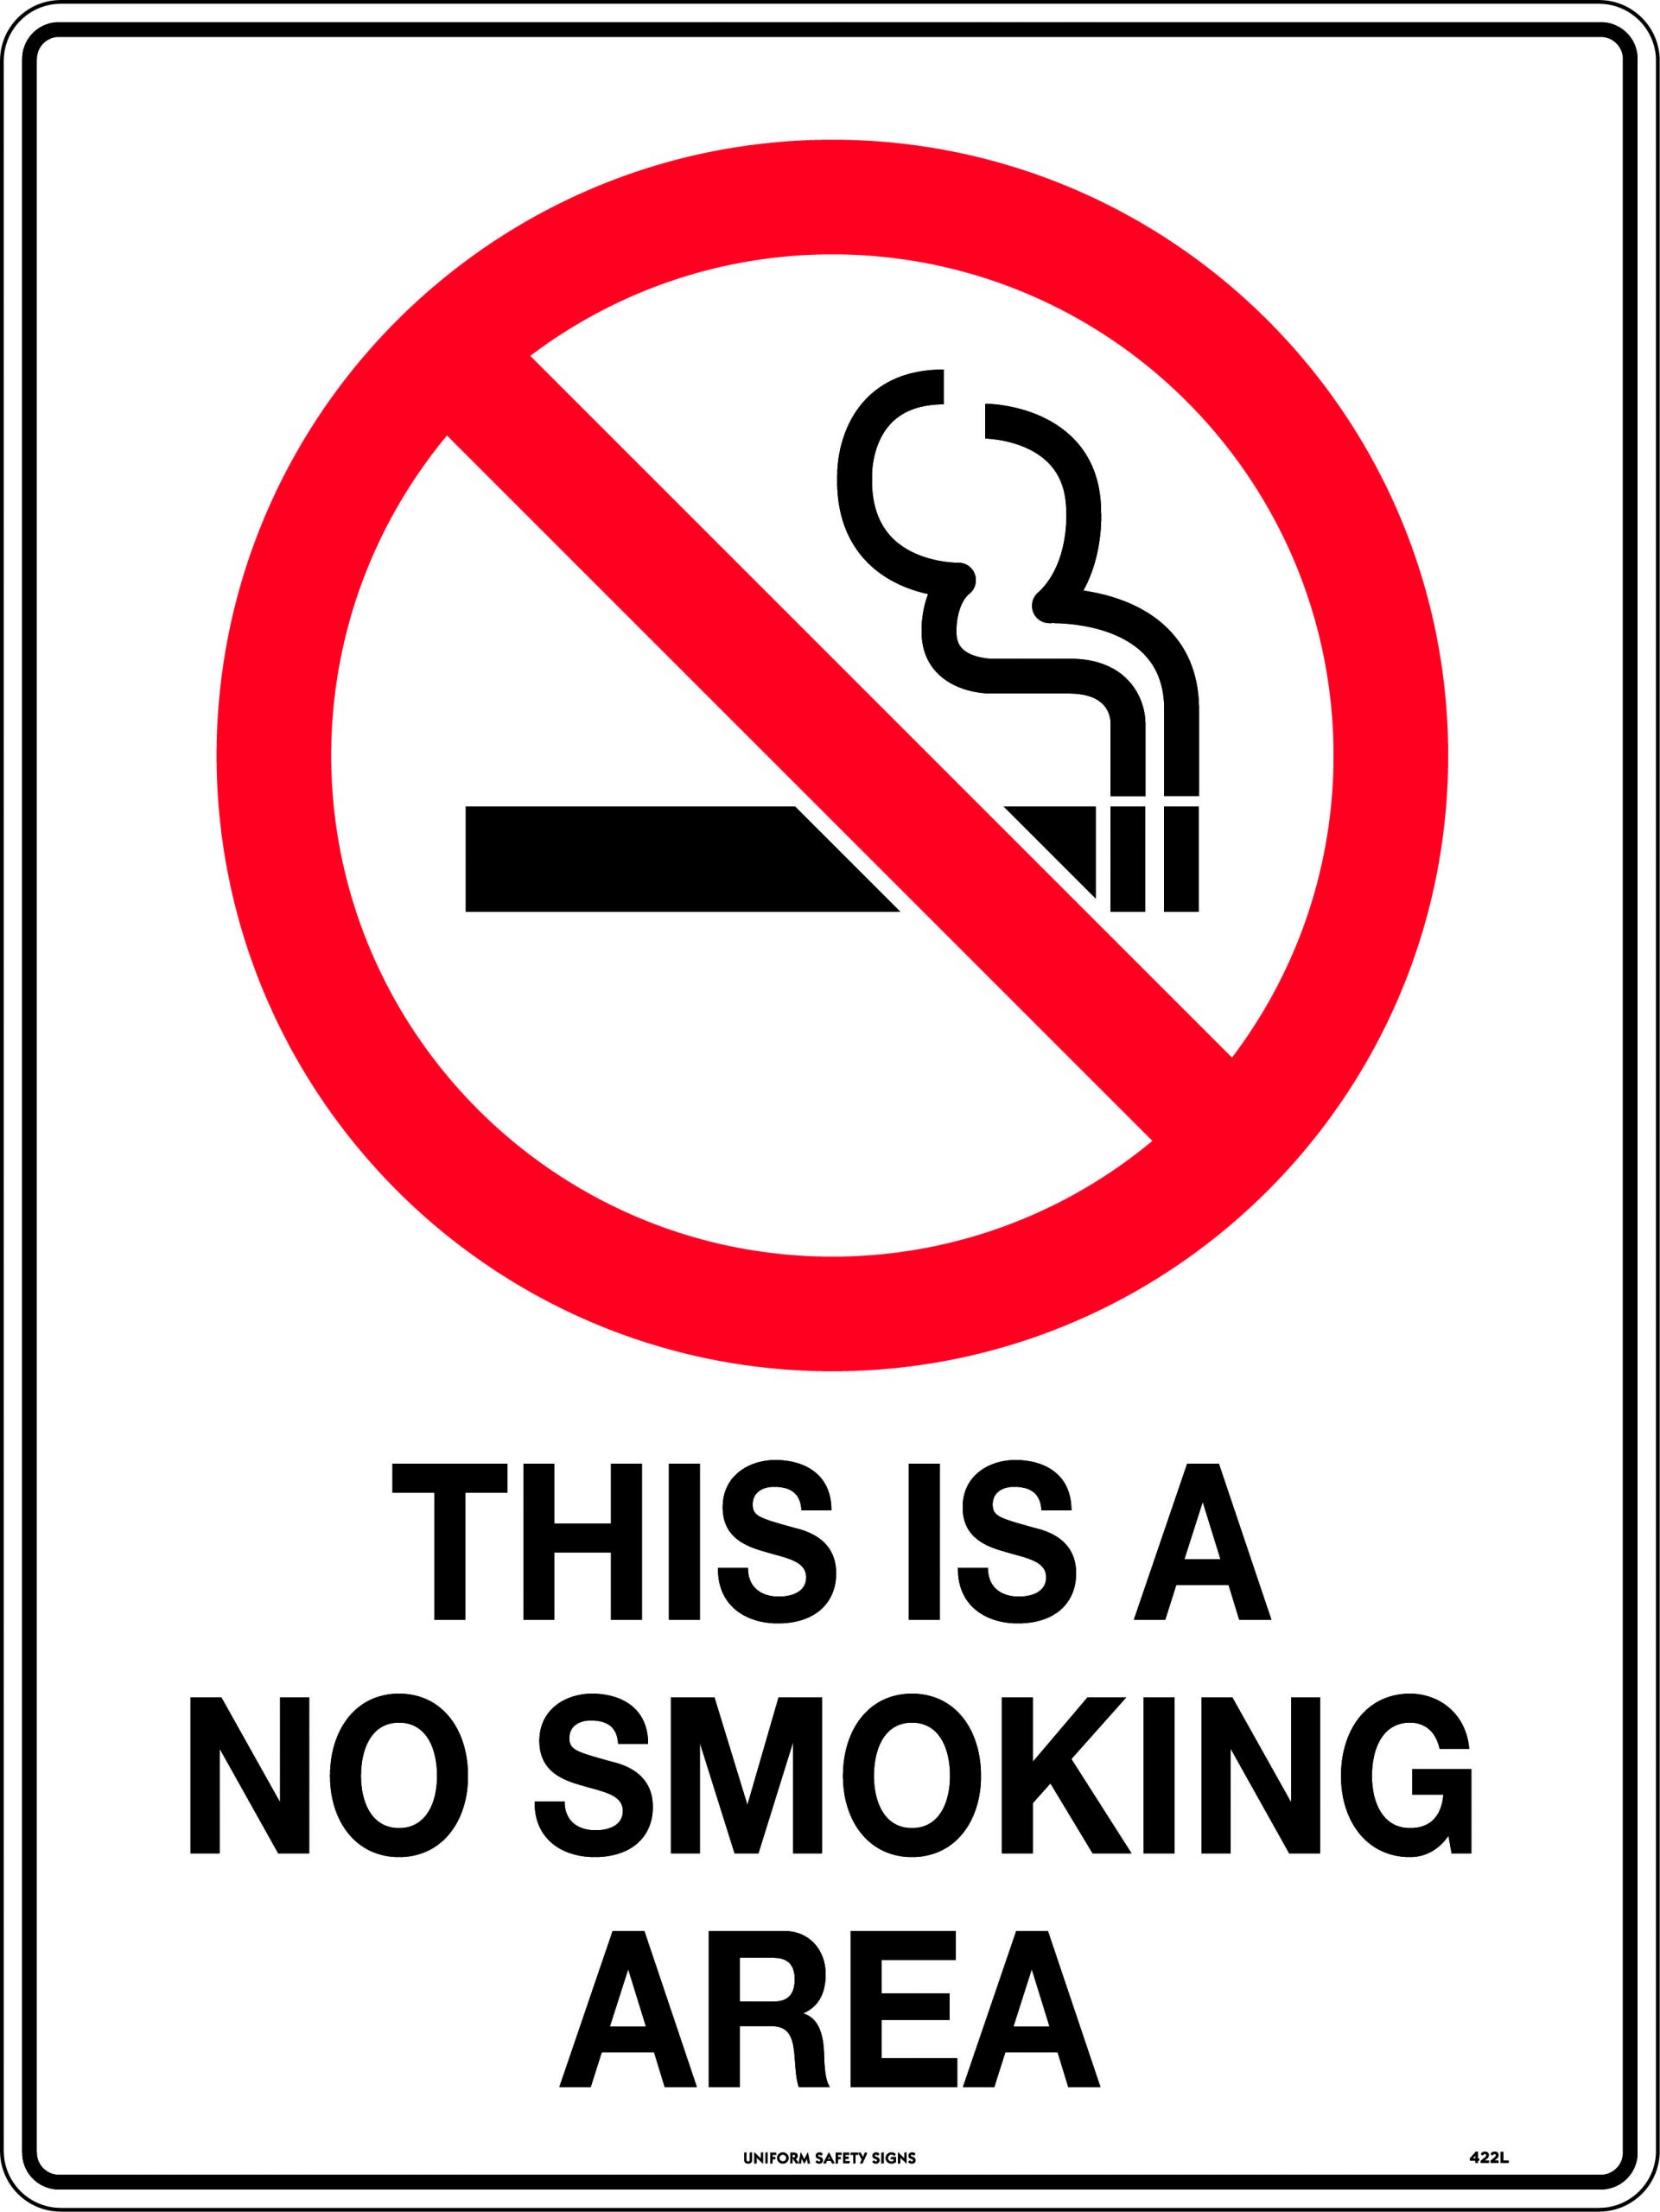 No Smoking Signage Meaning